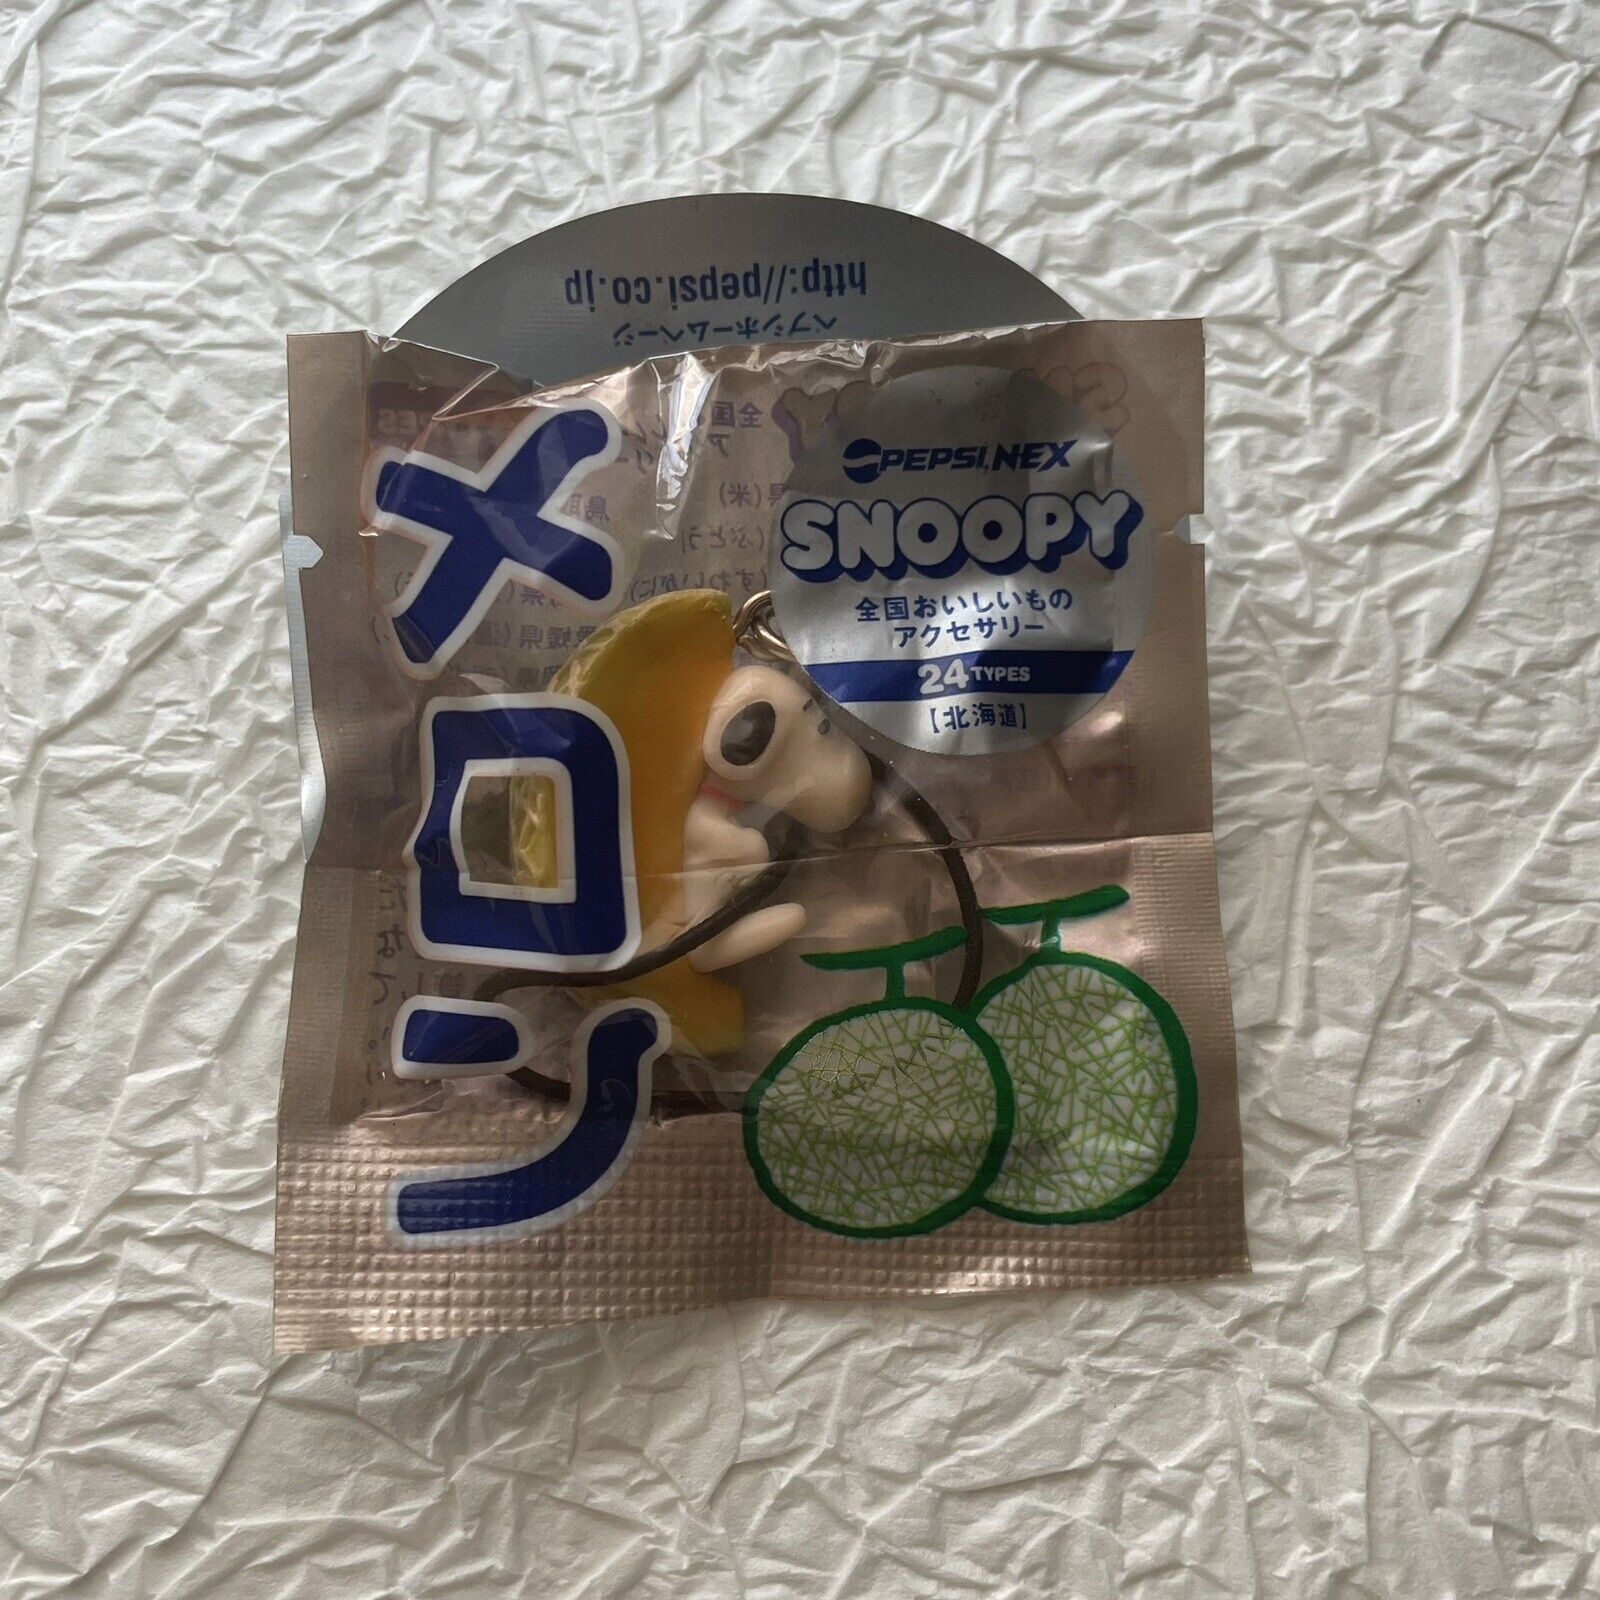 Rare Peanuts Snoopy Pepsi Nex Fruit Cantaloupe Melon Keychain Strap Gotochi